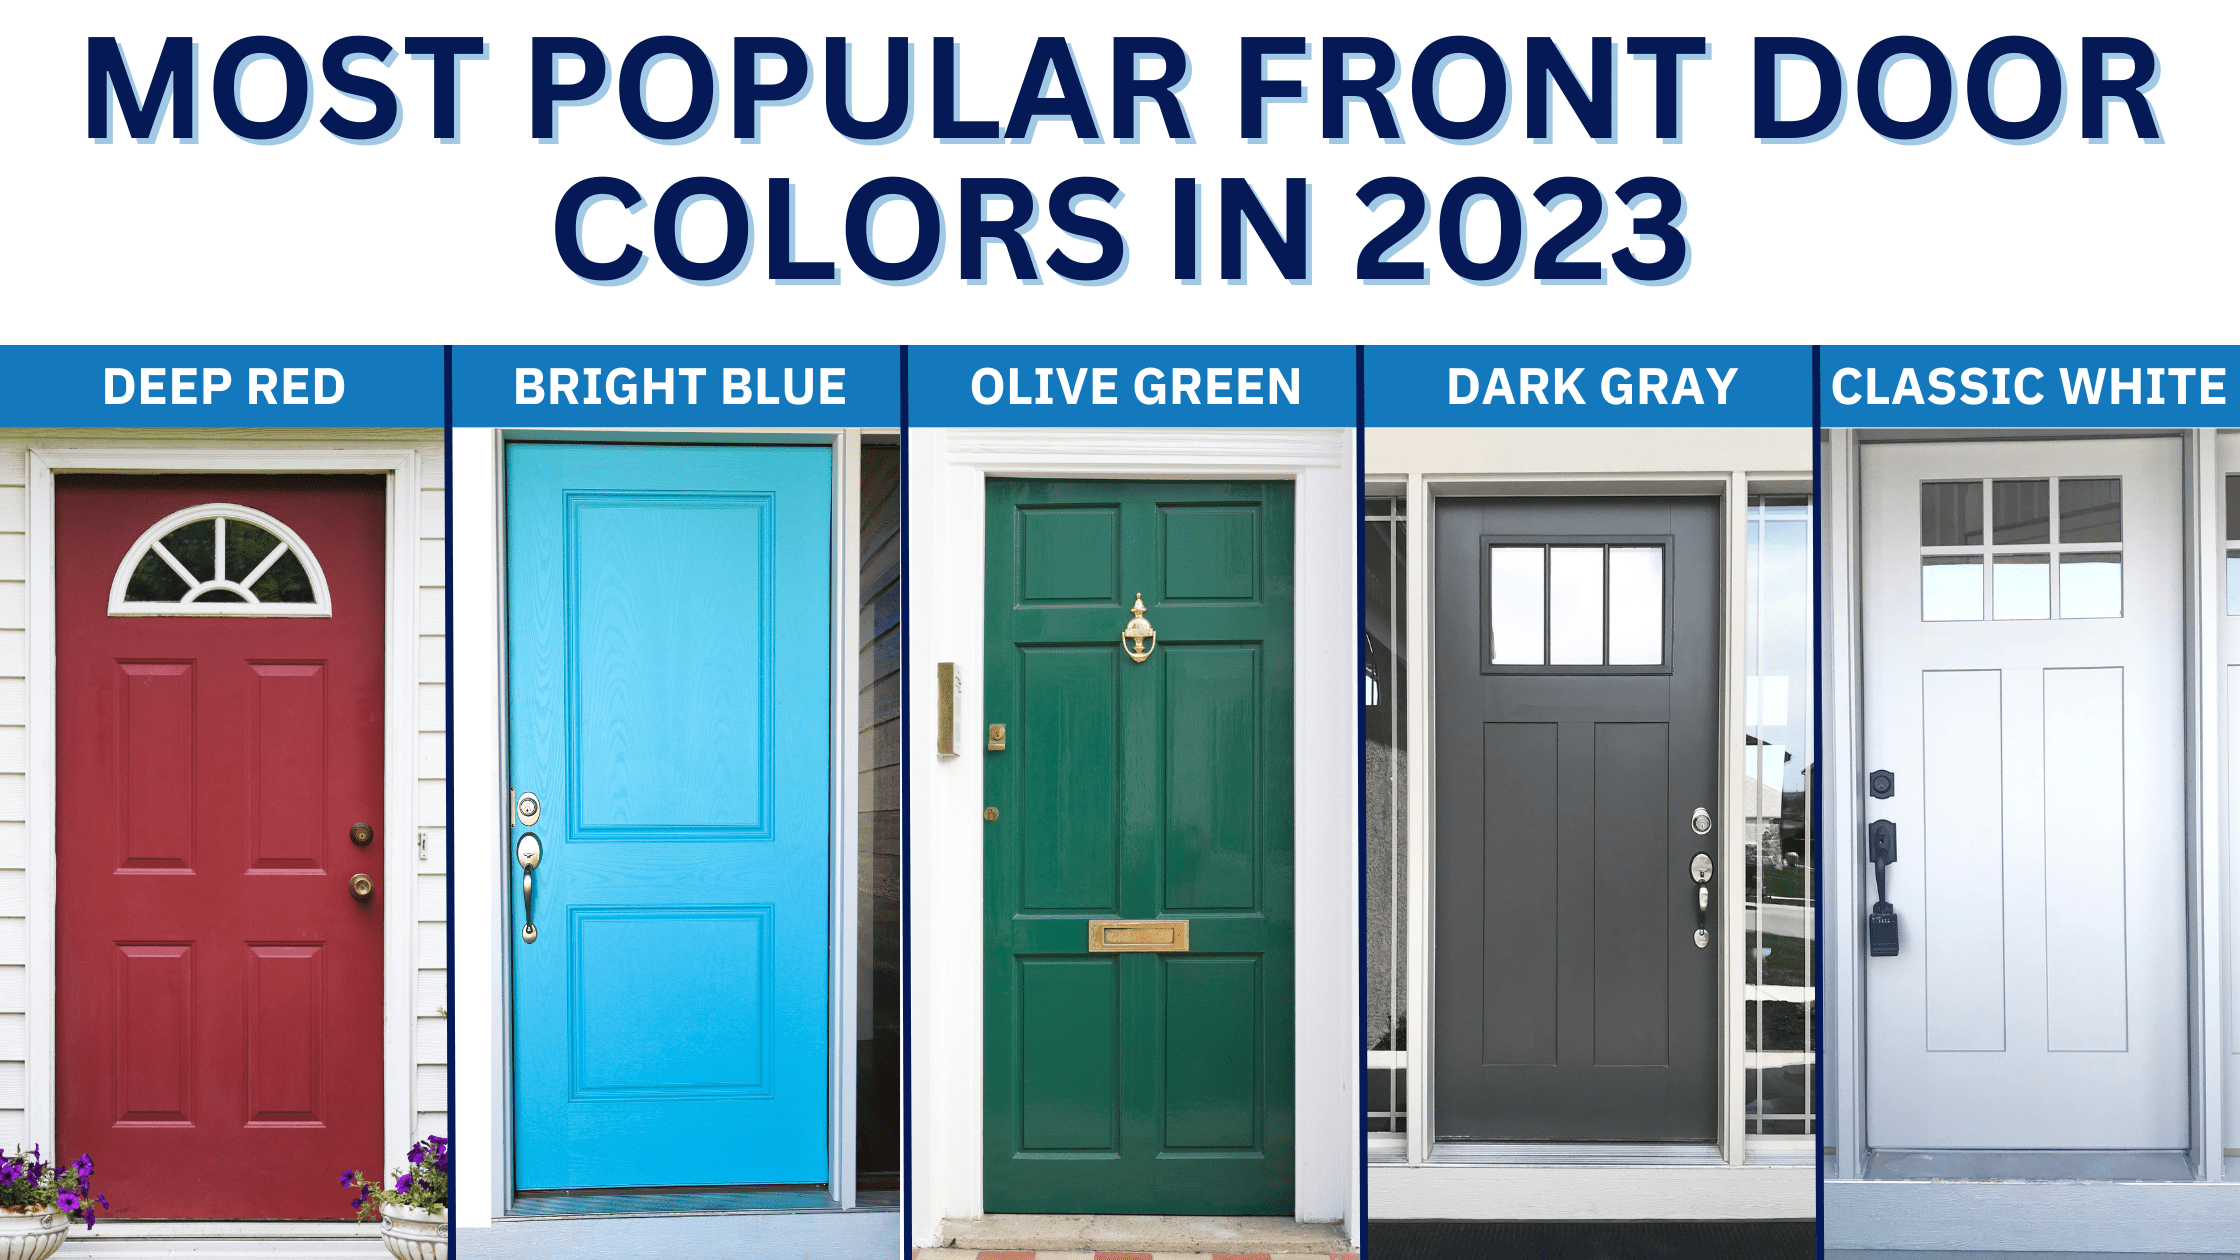 Most popular front door colors for 2023